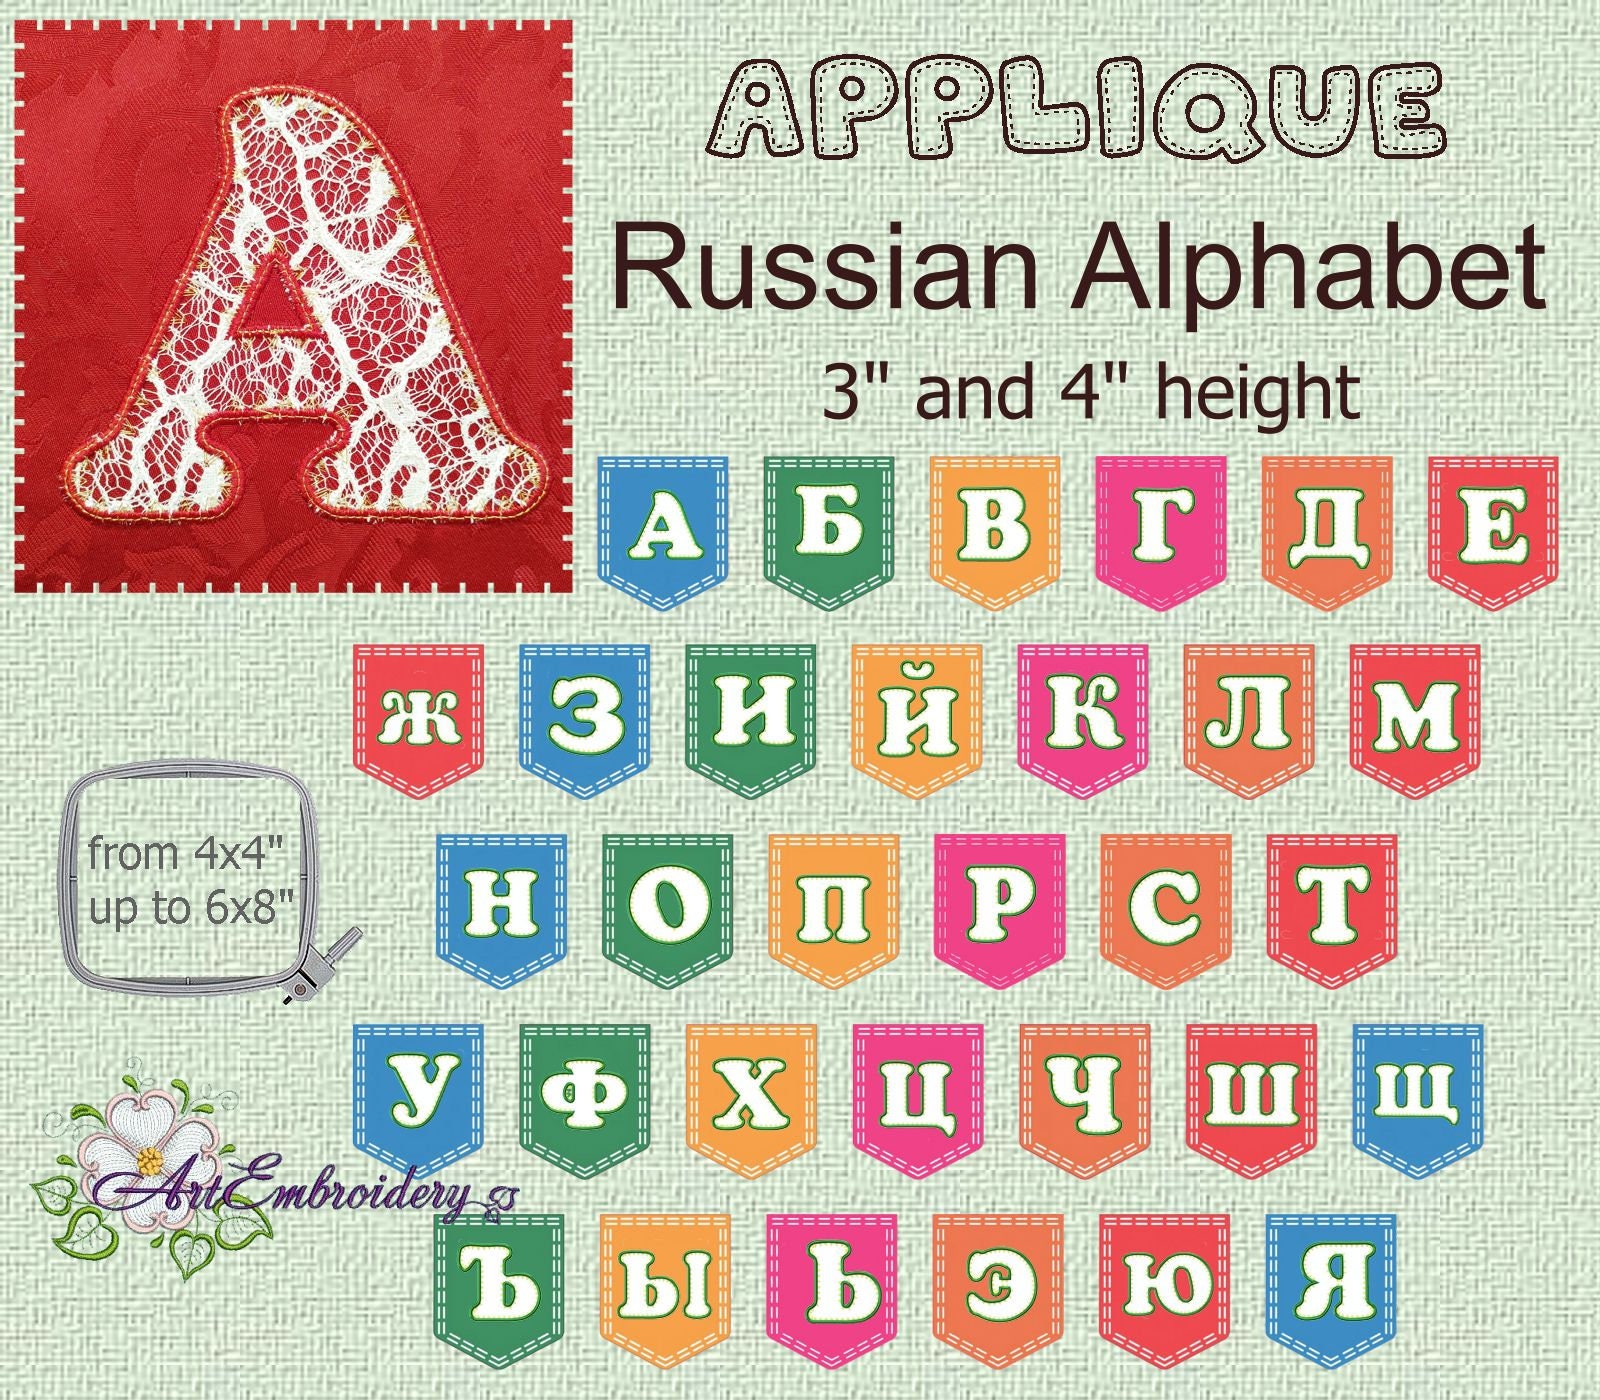 My Ukrainian alphabet lore (A-Д)